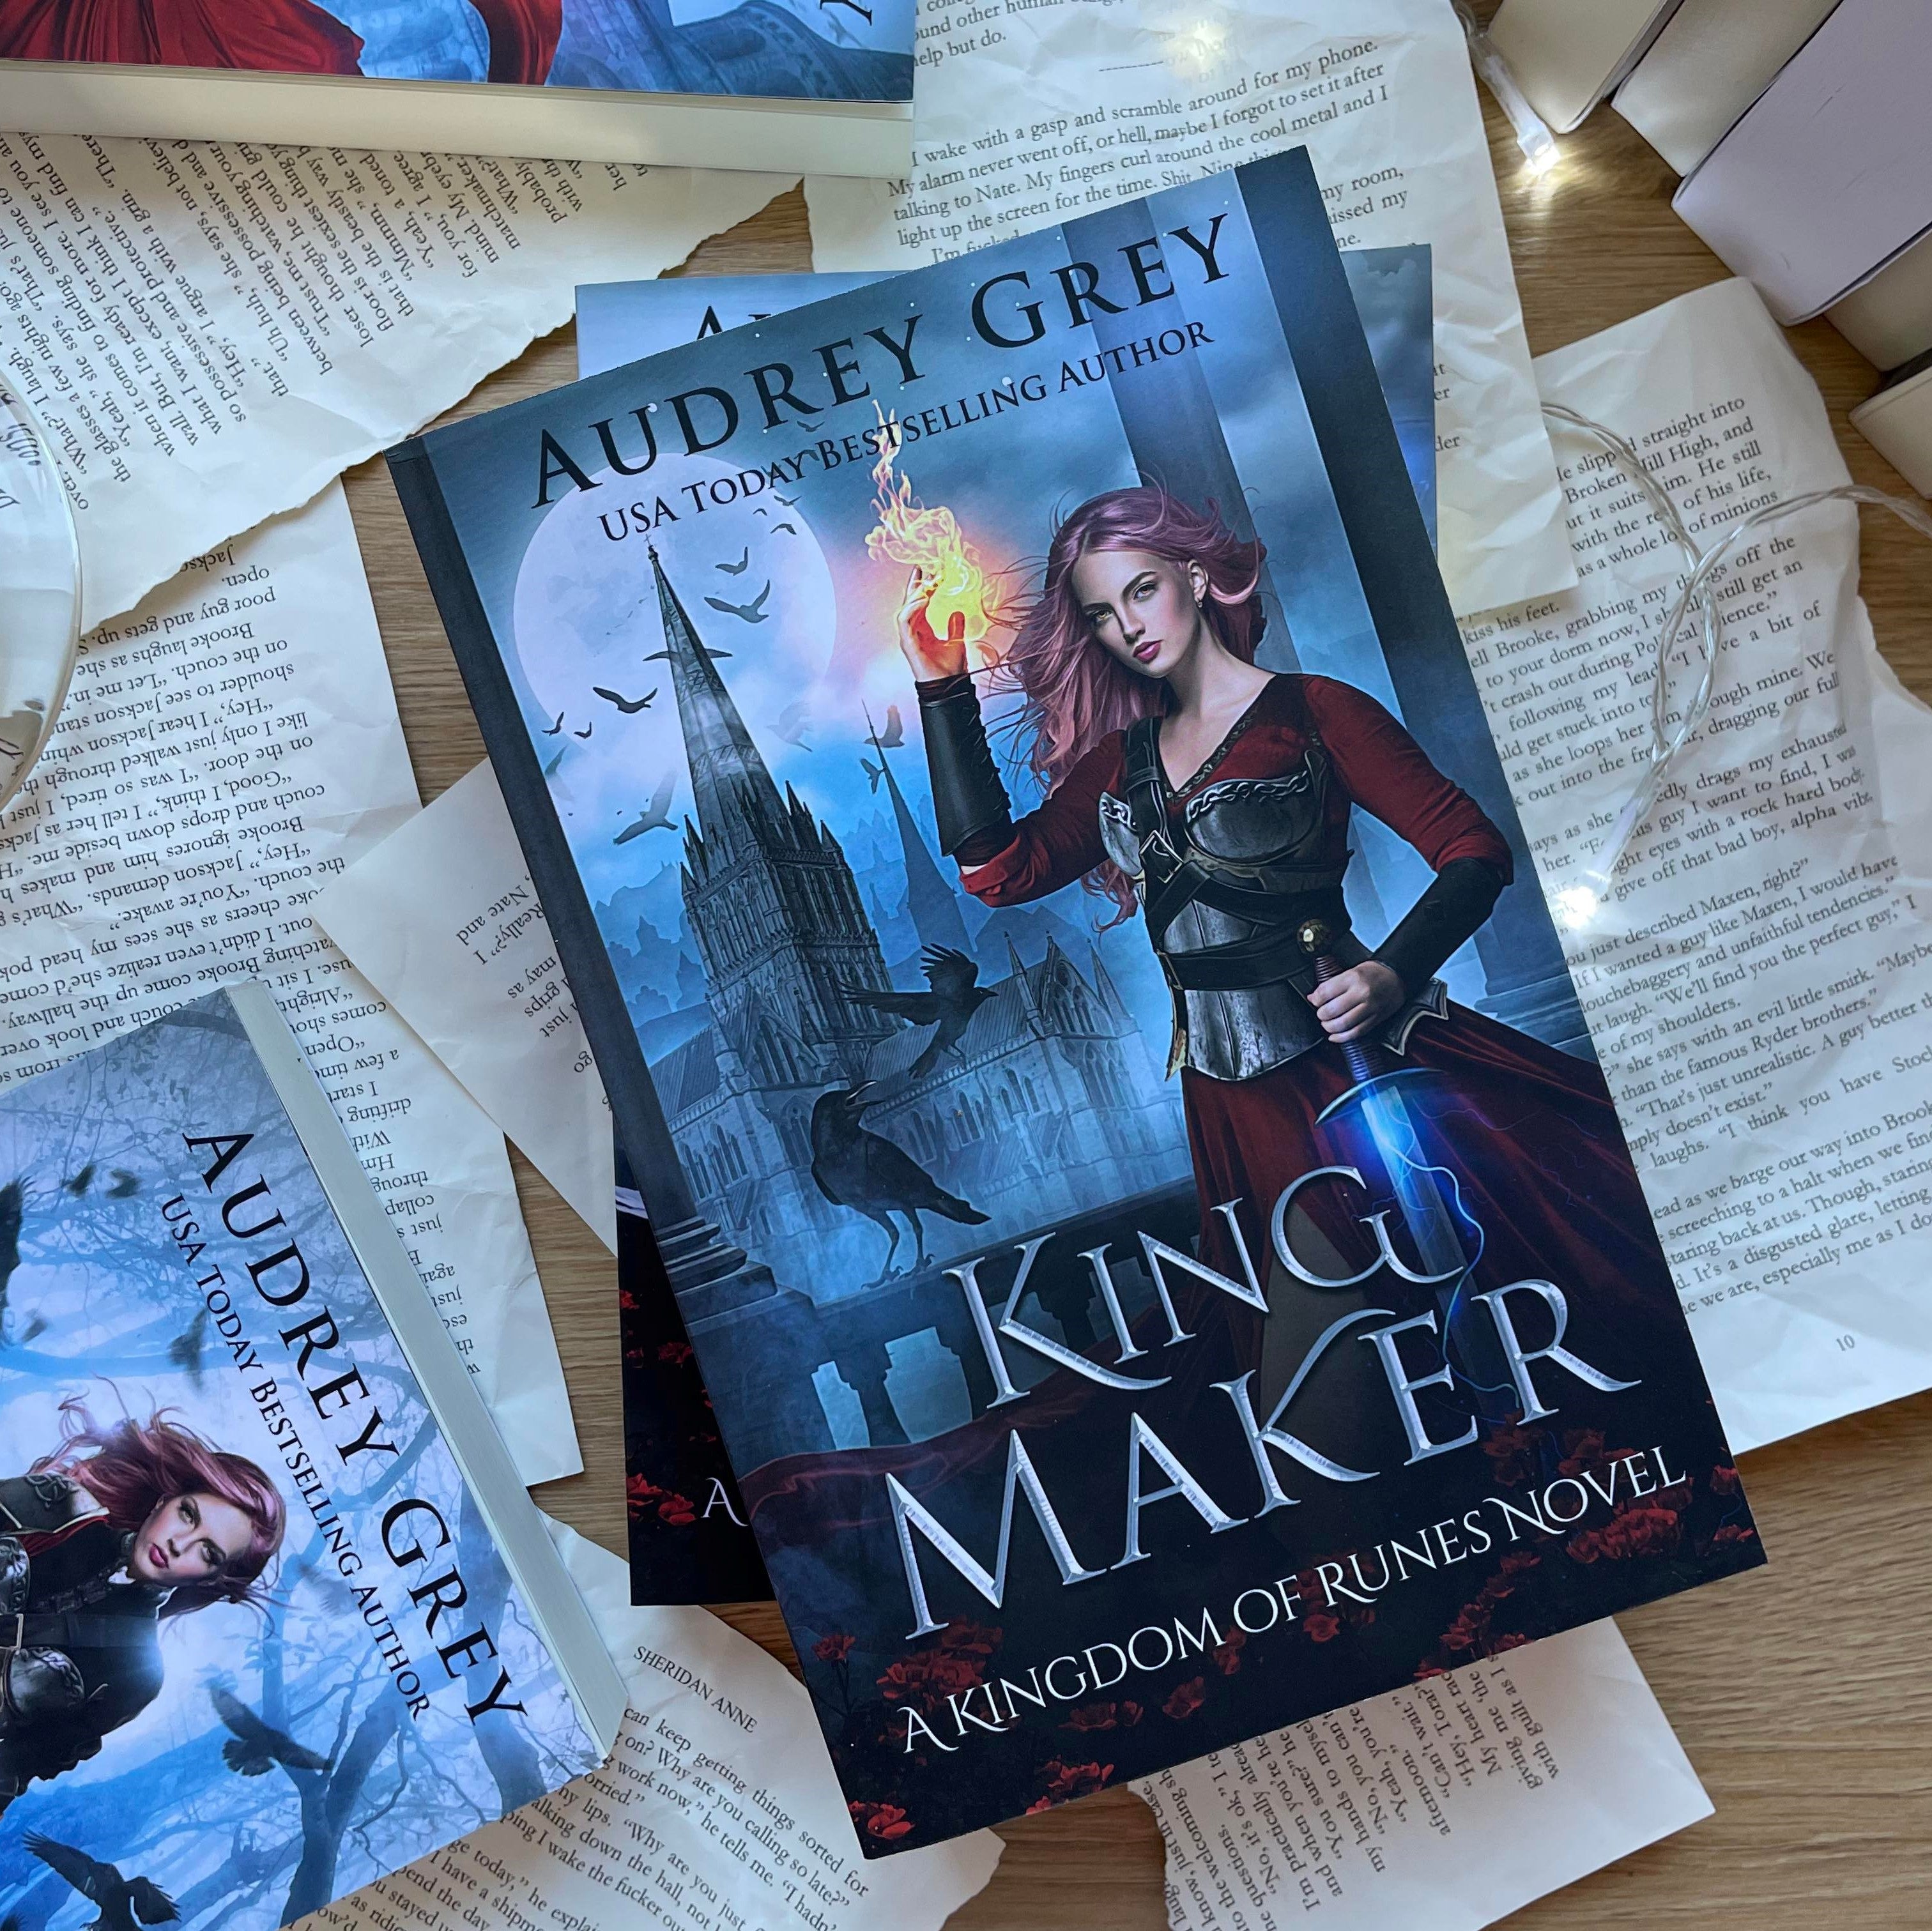 Kingdom of Runes series by Audrey Grey